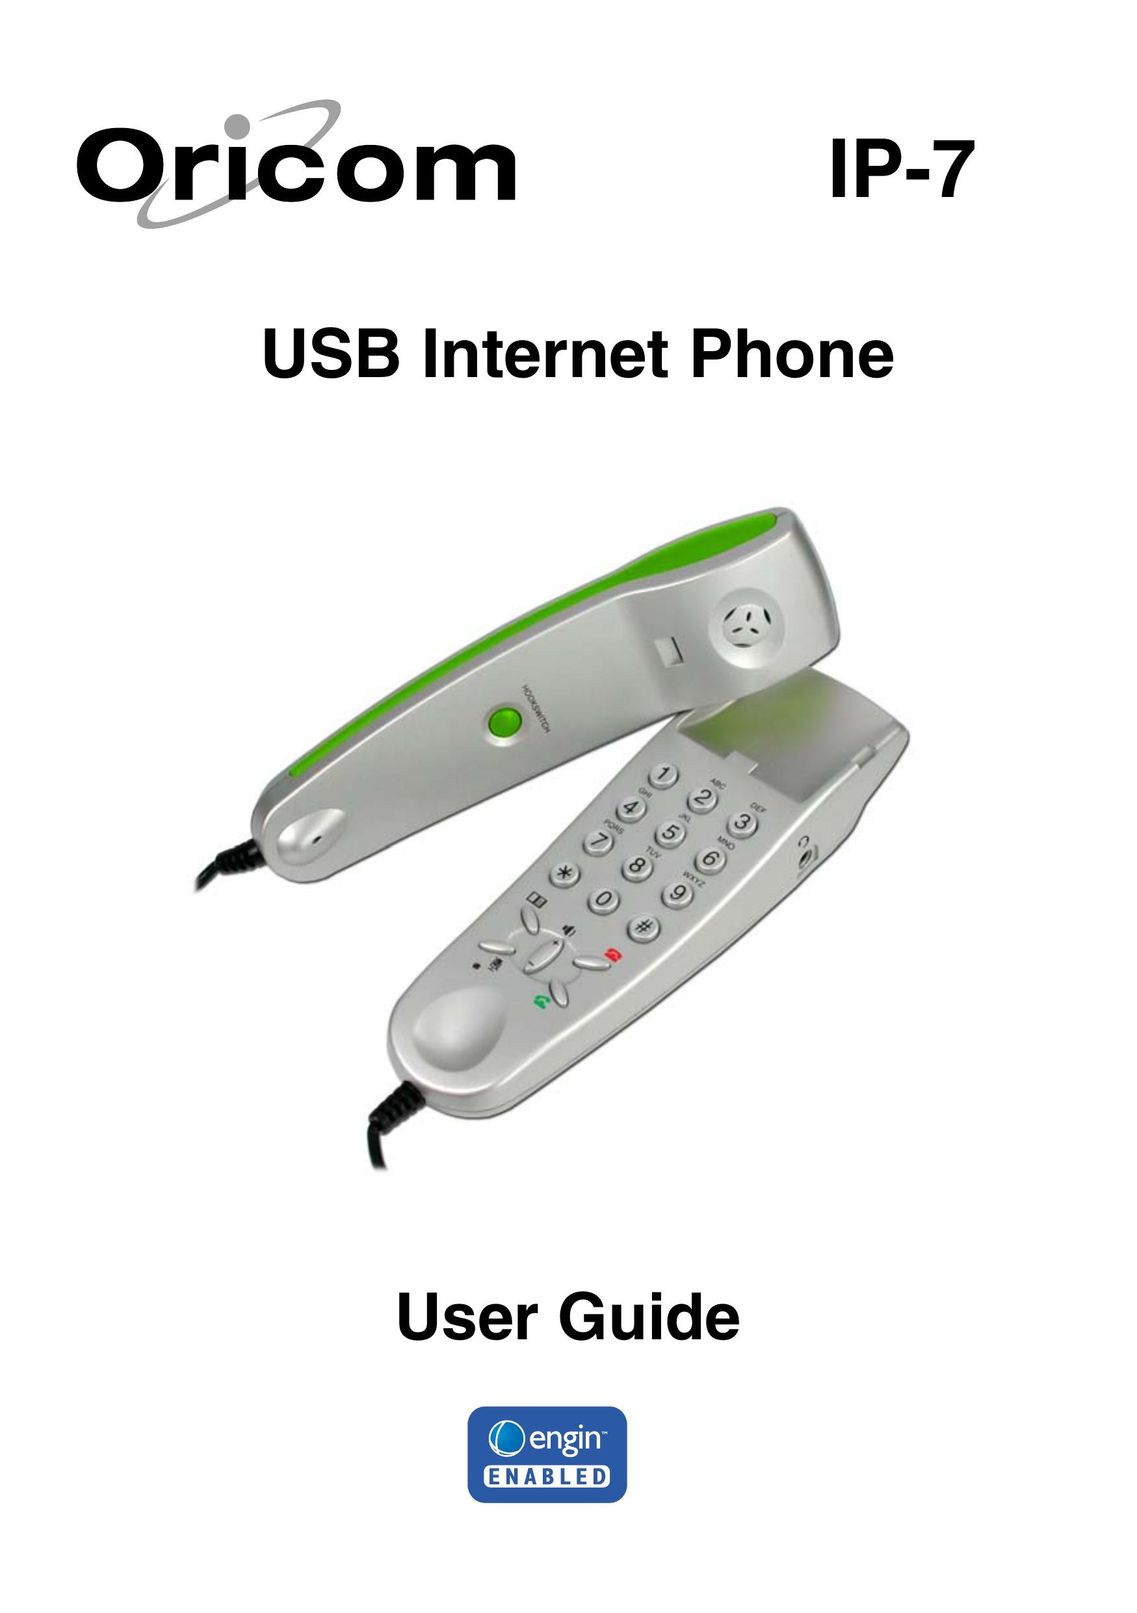 Oricom IP-7 Telephone User Manual